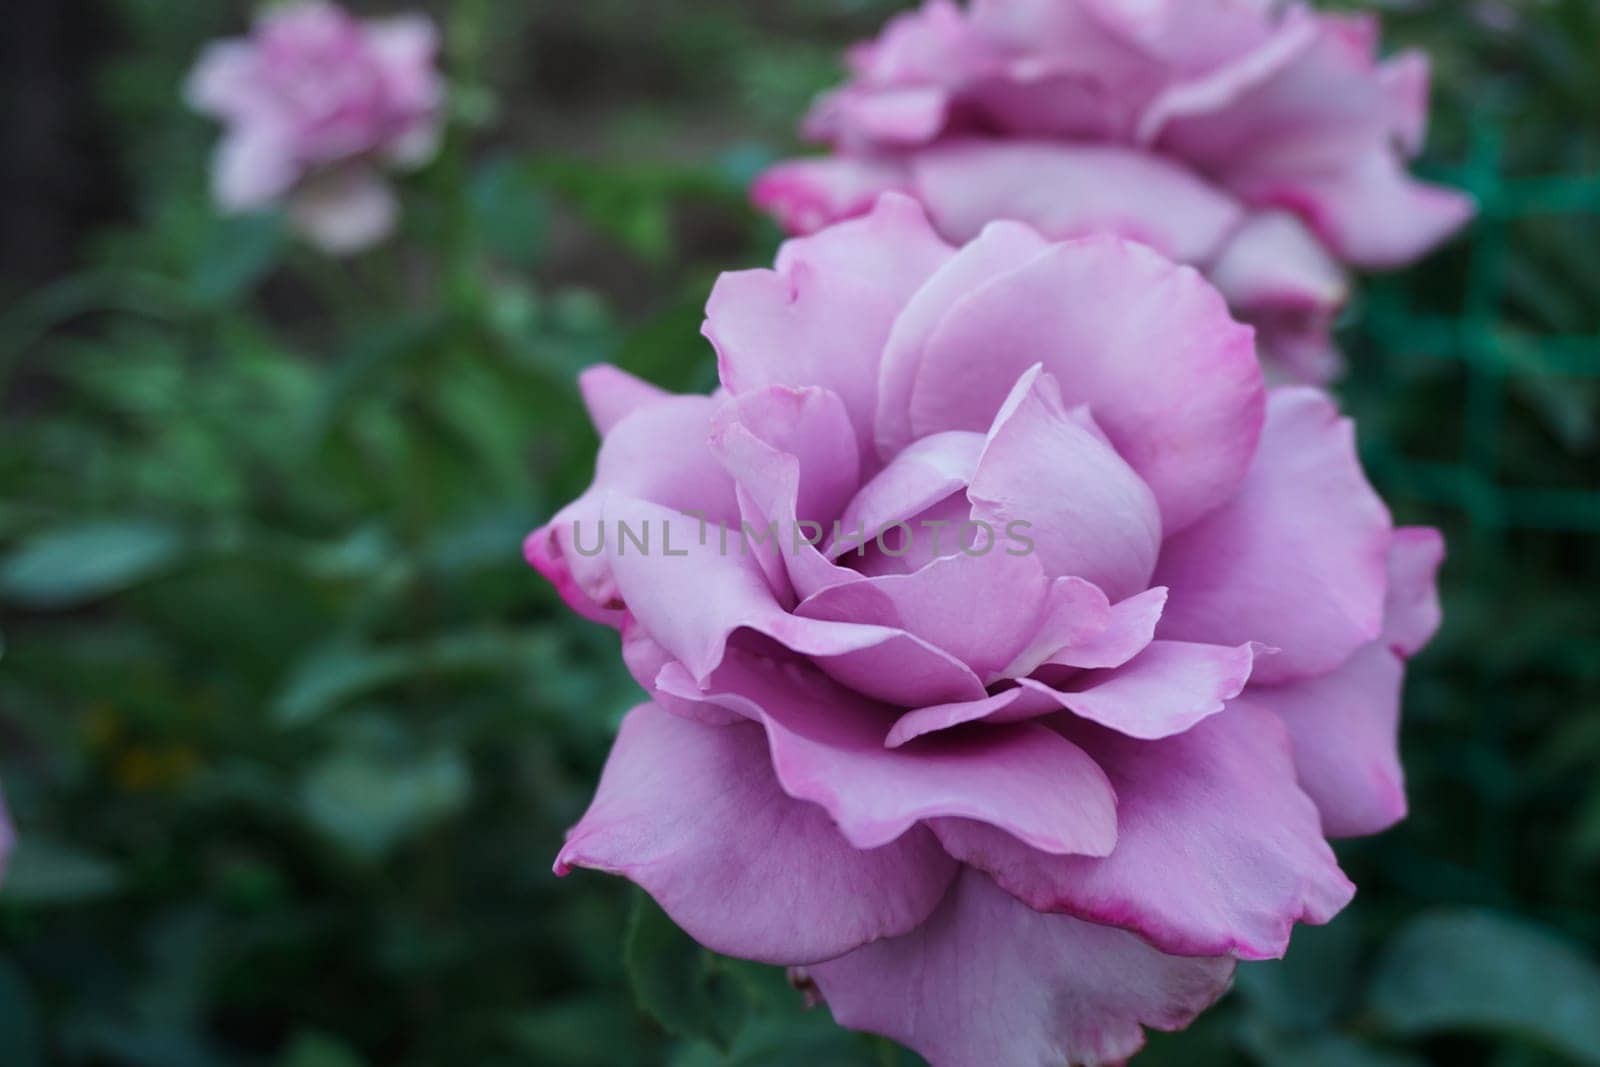 beautiful lilac rose flower shot close-up in the garden by Spirina